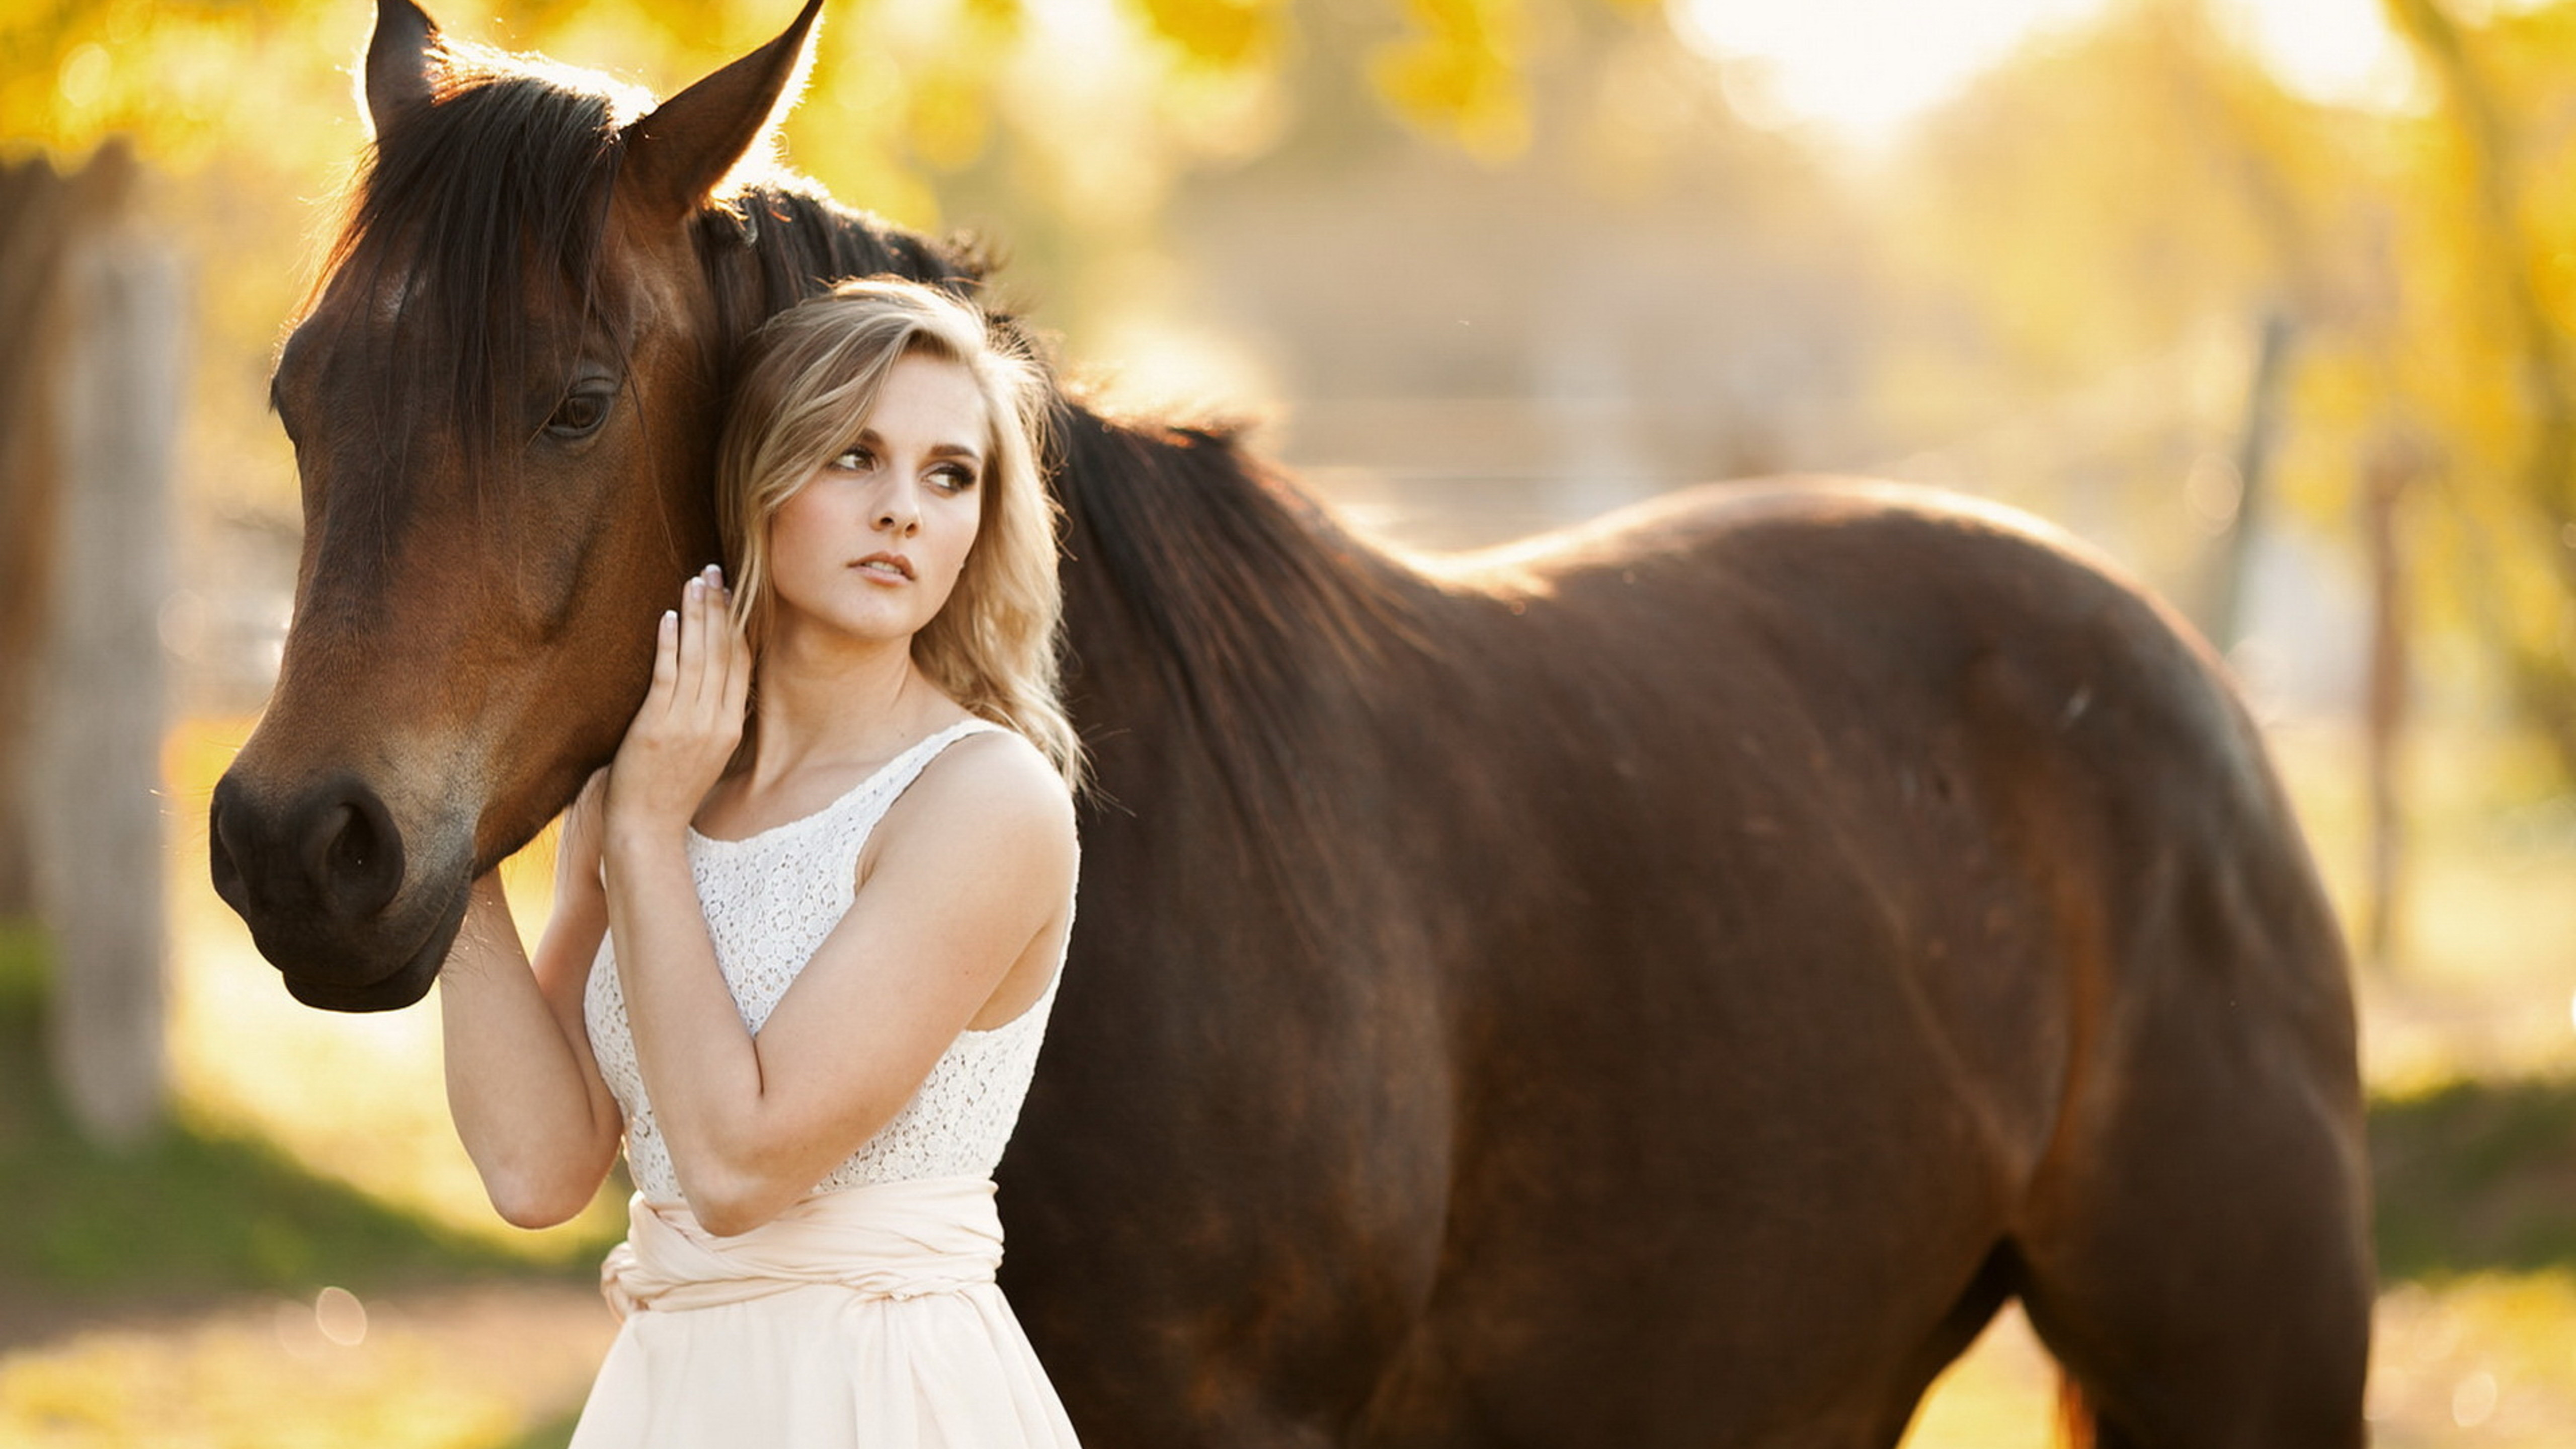 Девки и лошади. Девушка с лошадью. Фотосессия с лошадкой. Девочка на лошади. Красивая фотосессия с лошадью.